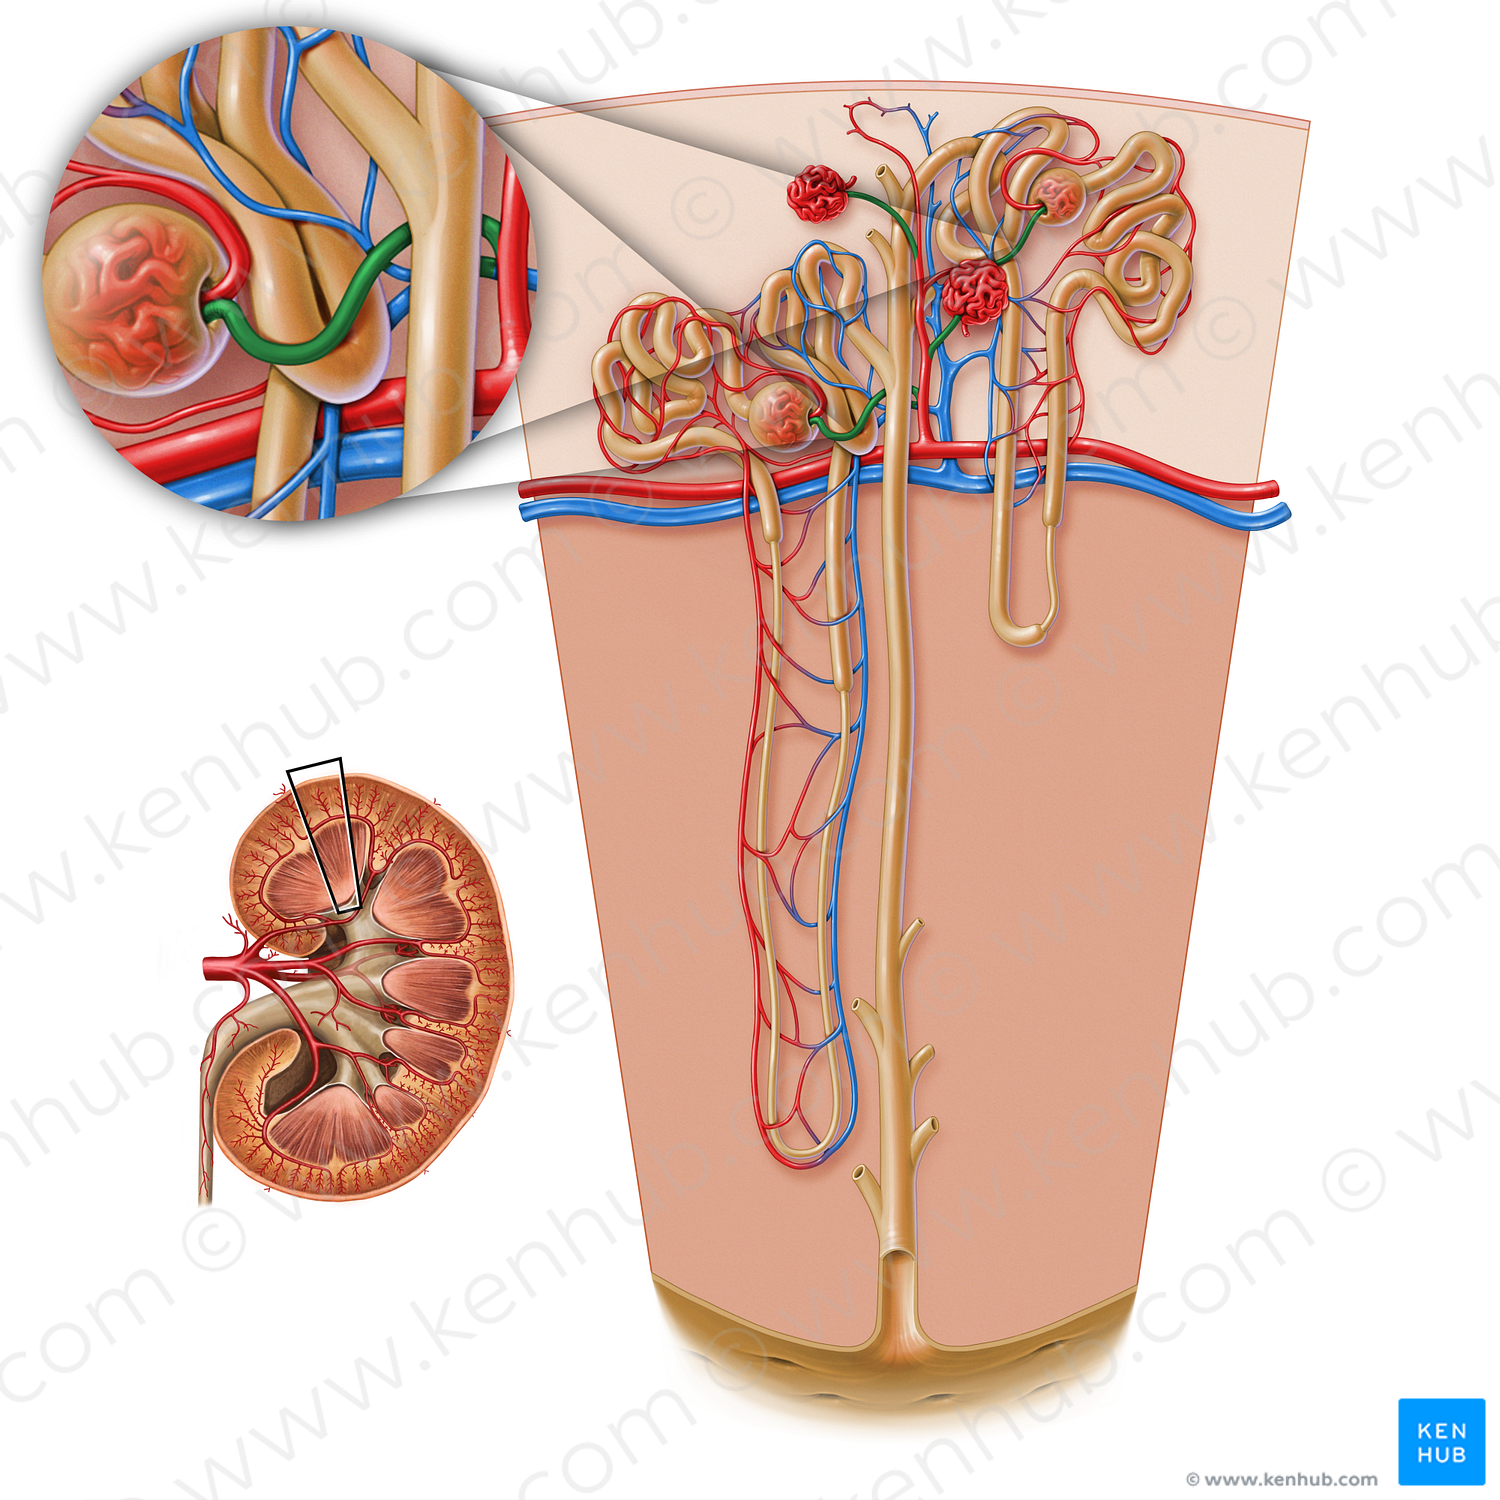 Afferent glomerular arteriole of renal corpuscle (#17203)